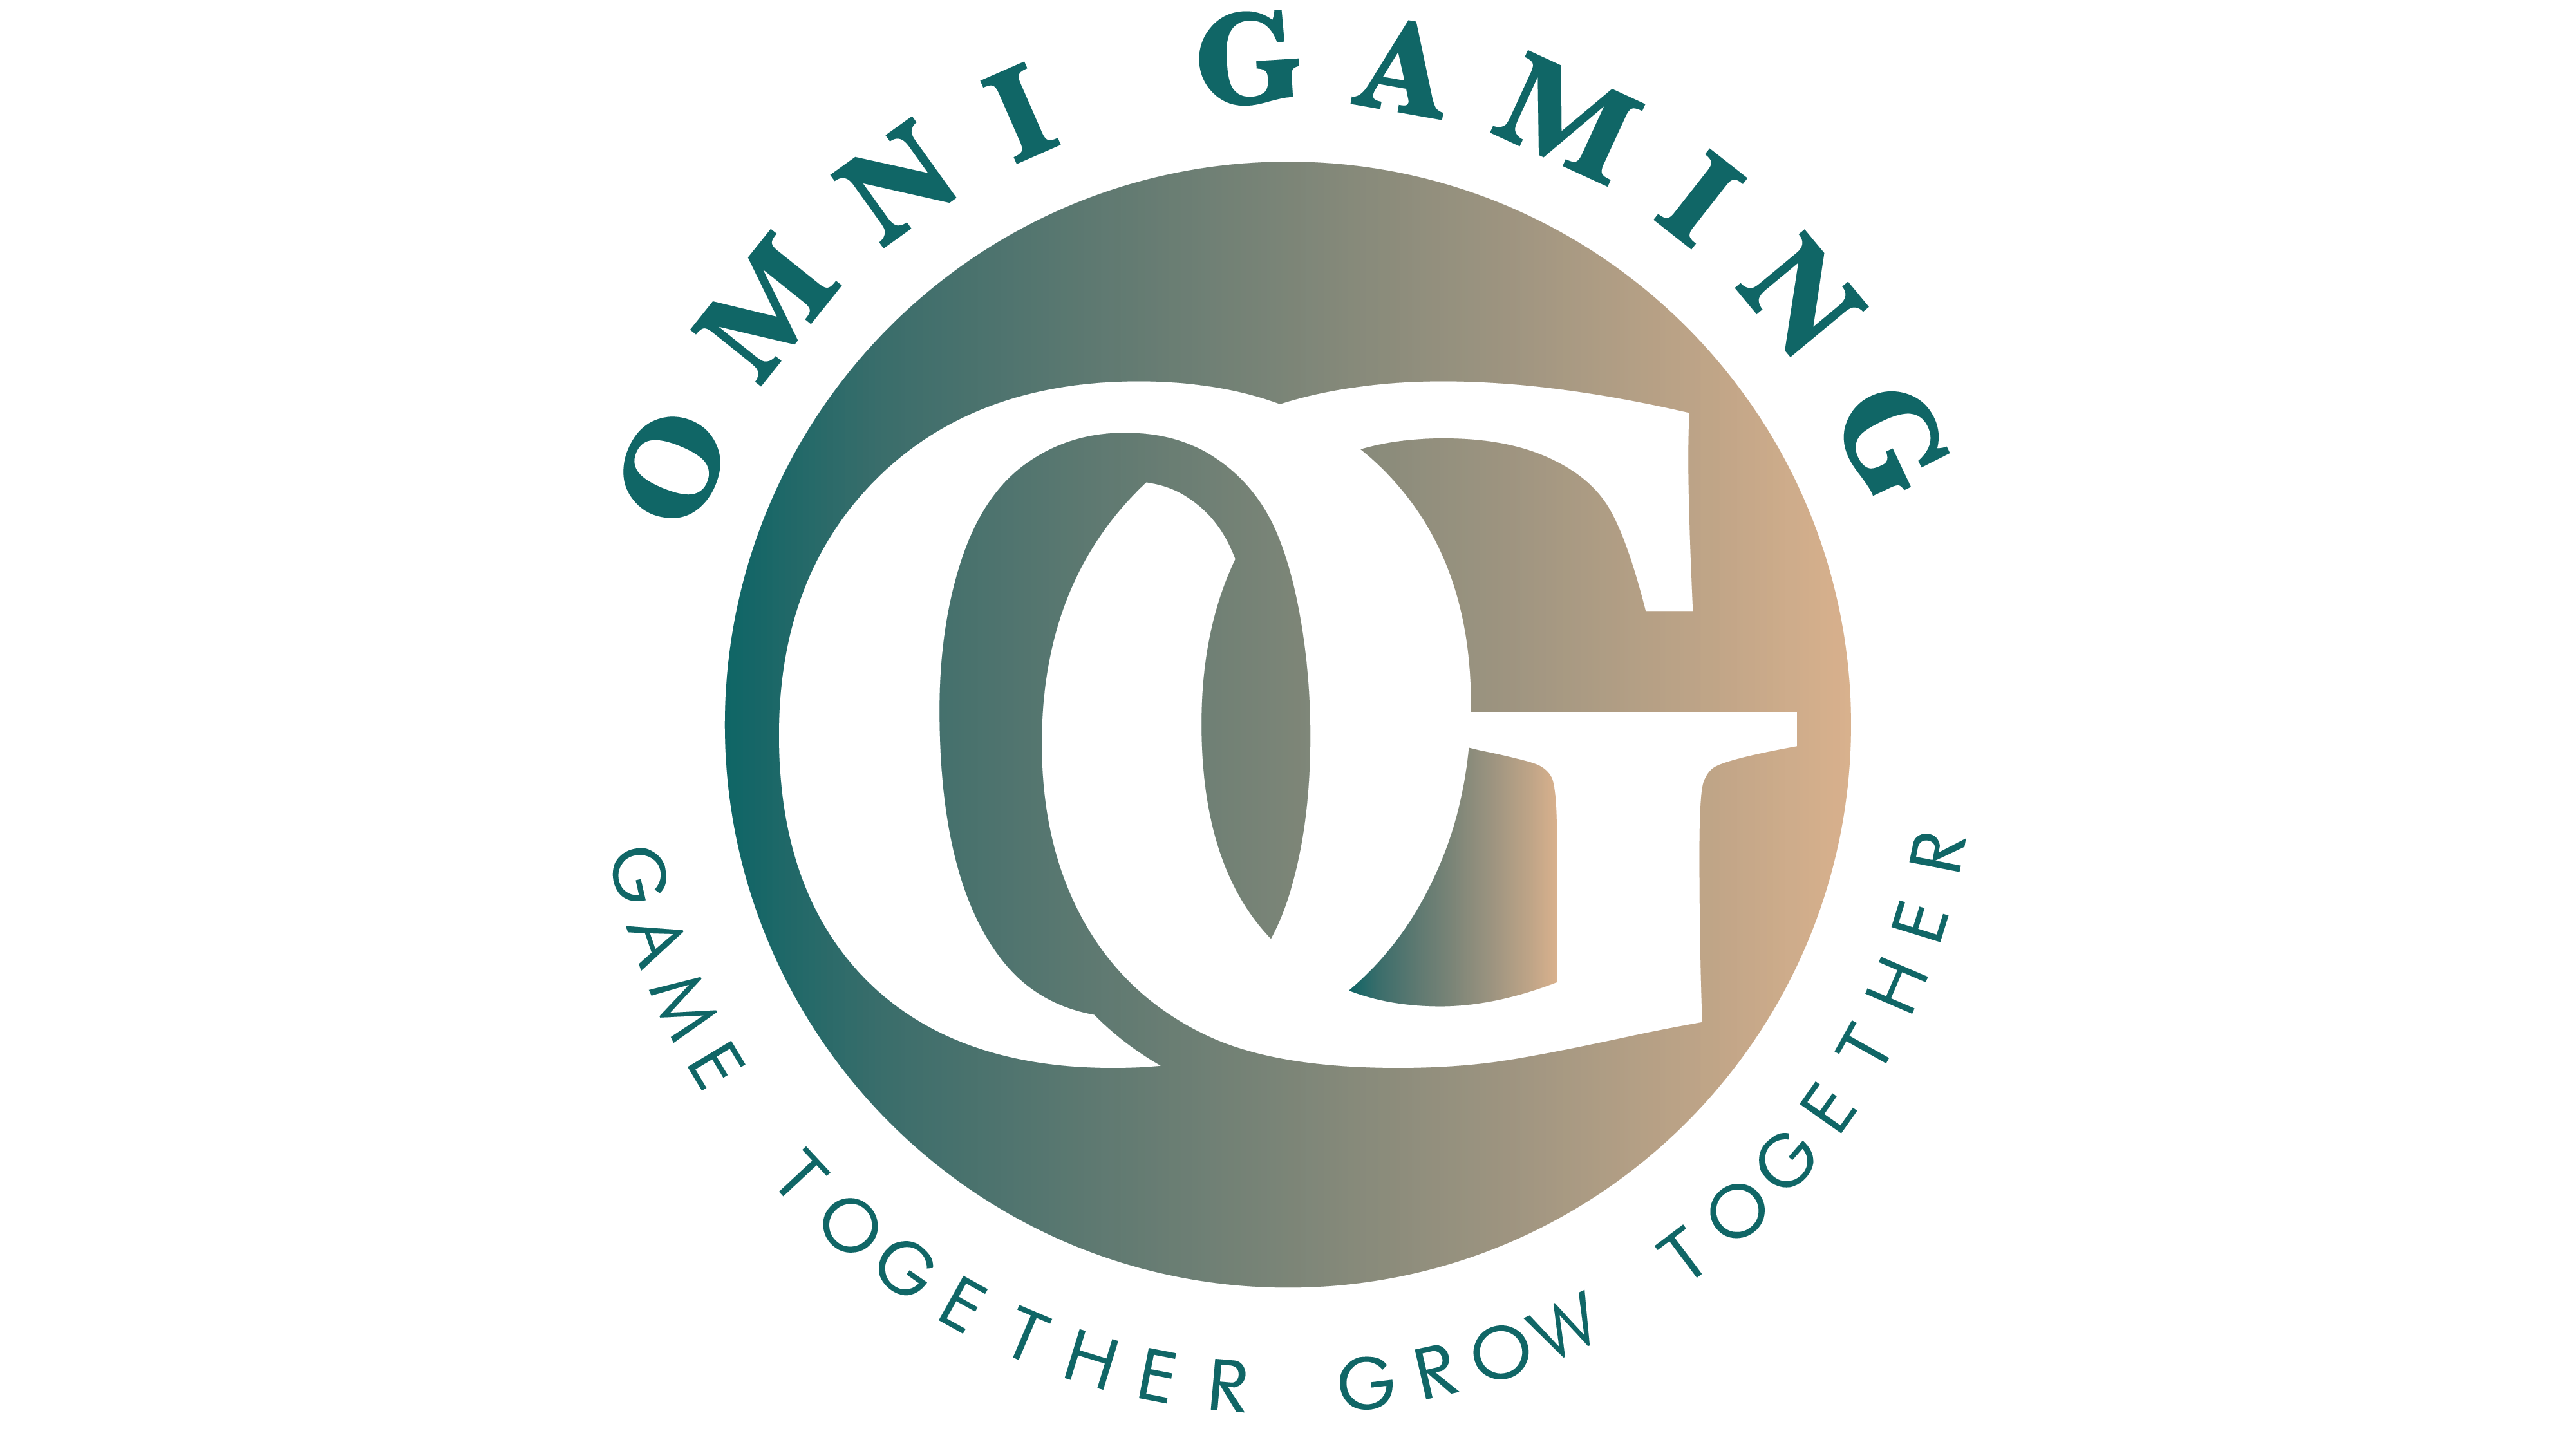 Omni Gaming